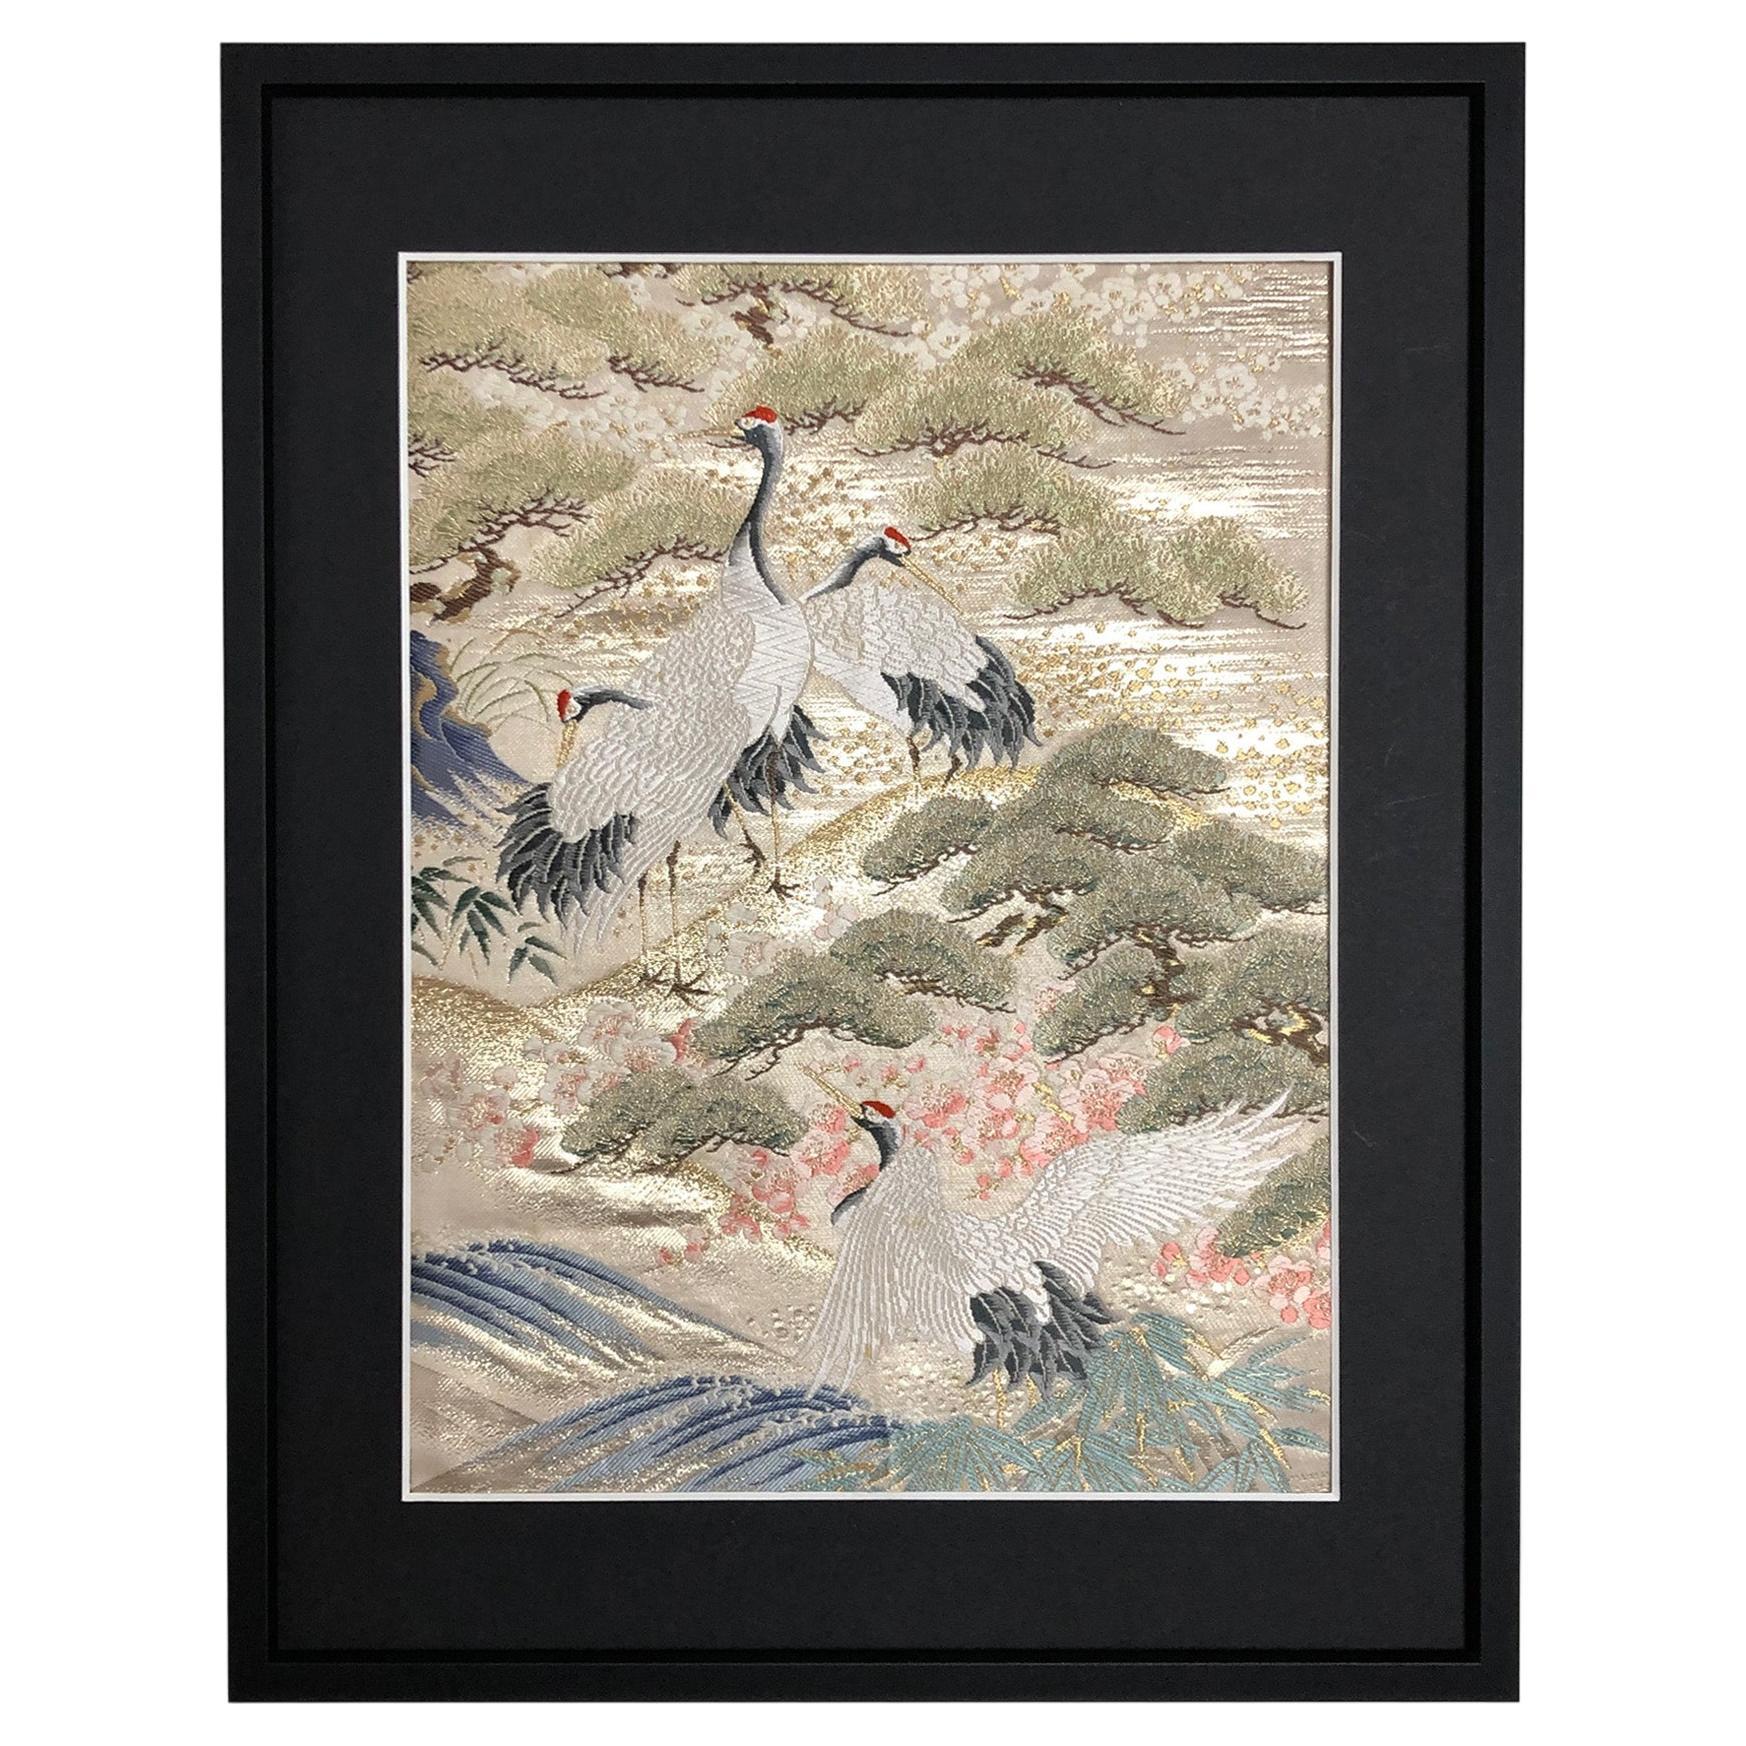 "The Crane's Departure" by Kimono-Couture, Kimono Art, Textile Art, Japanese Art For Sale